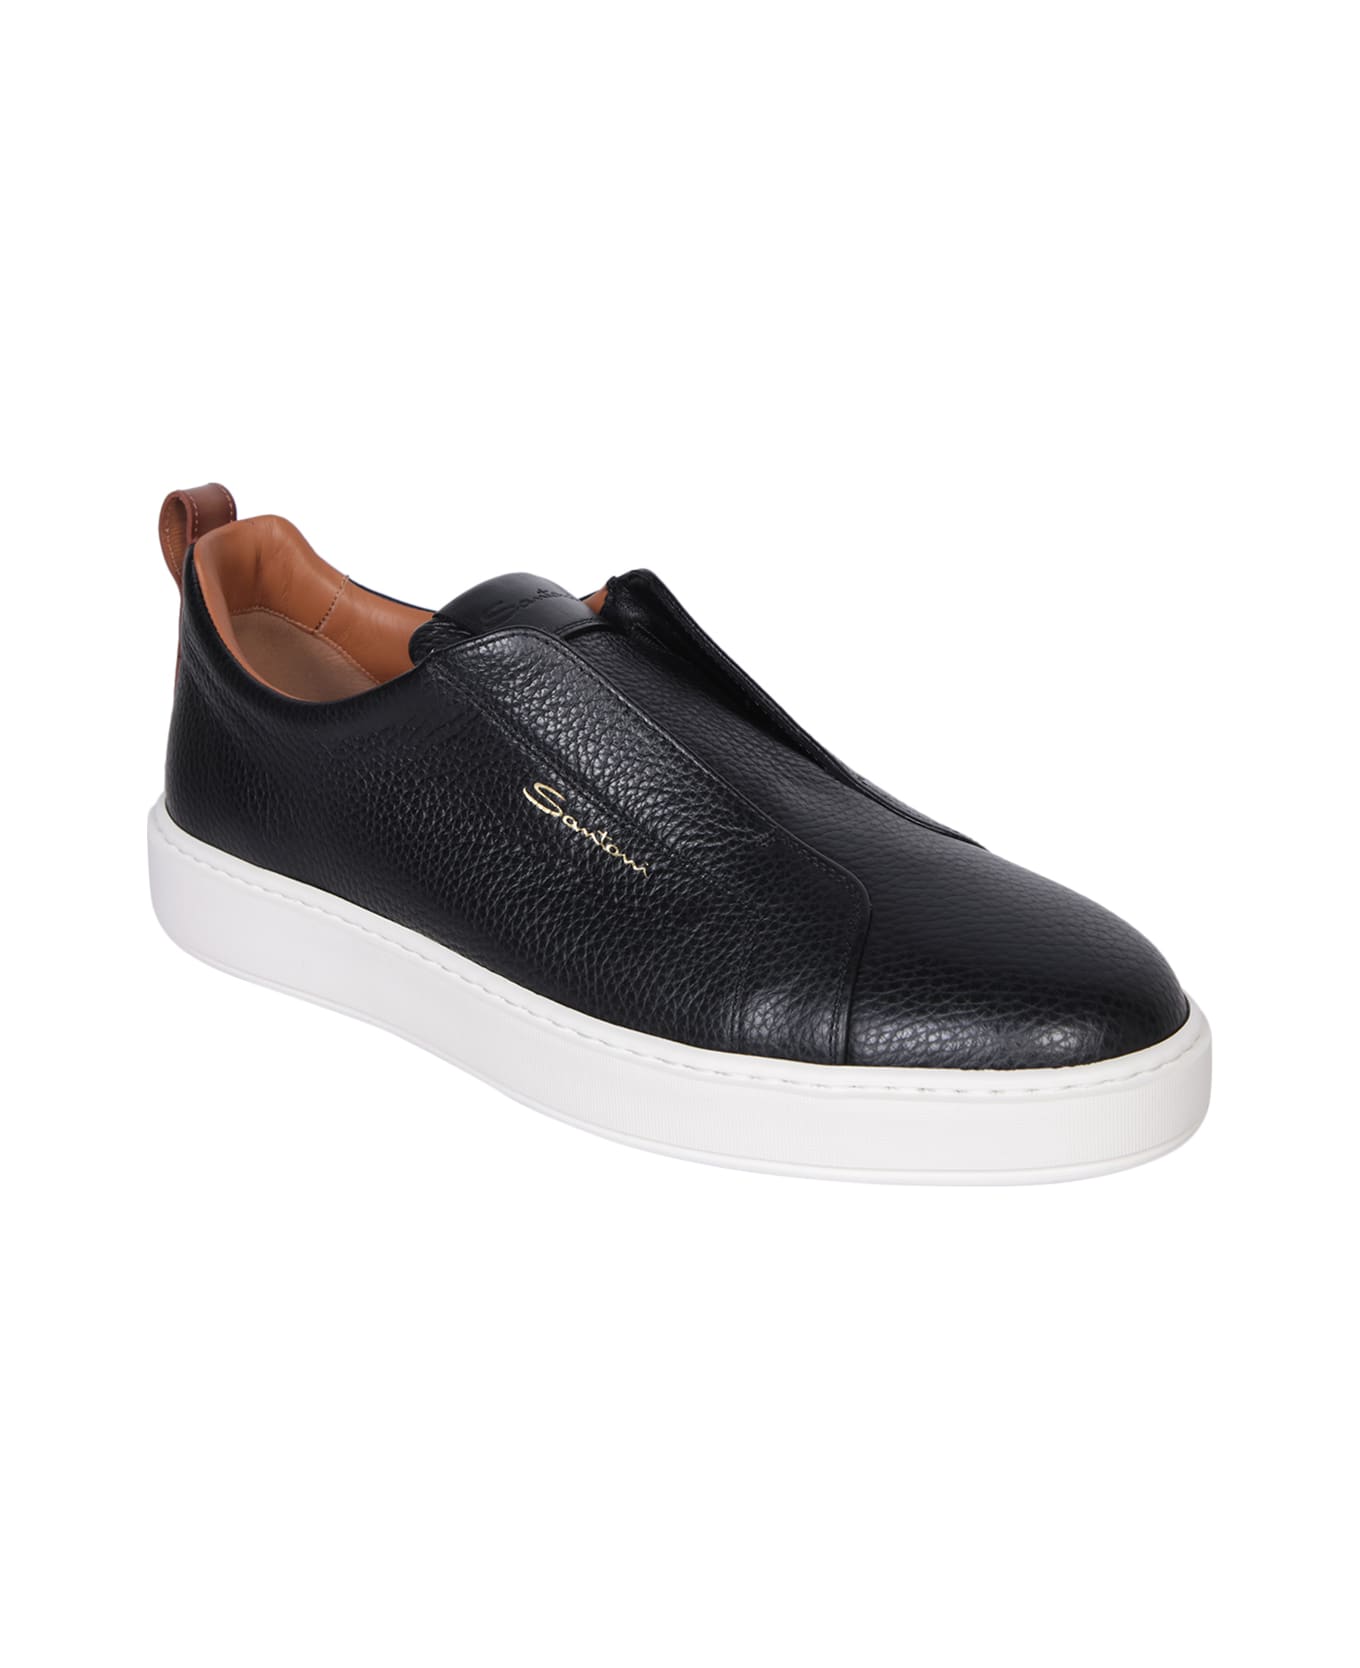 Santoni Victor Leather Slip-on Black Sneakers - Black